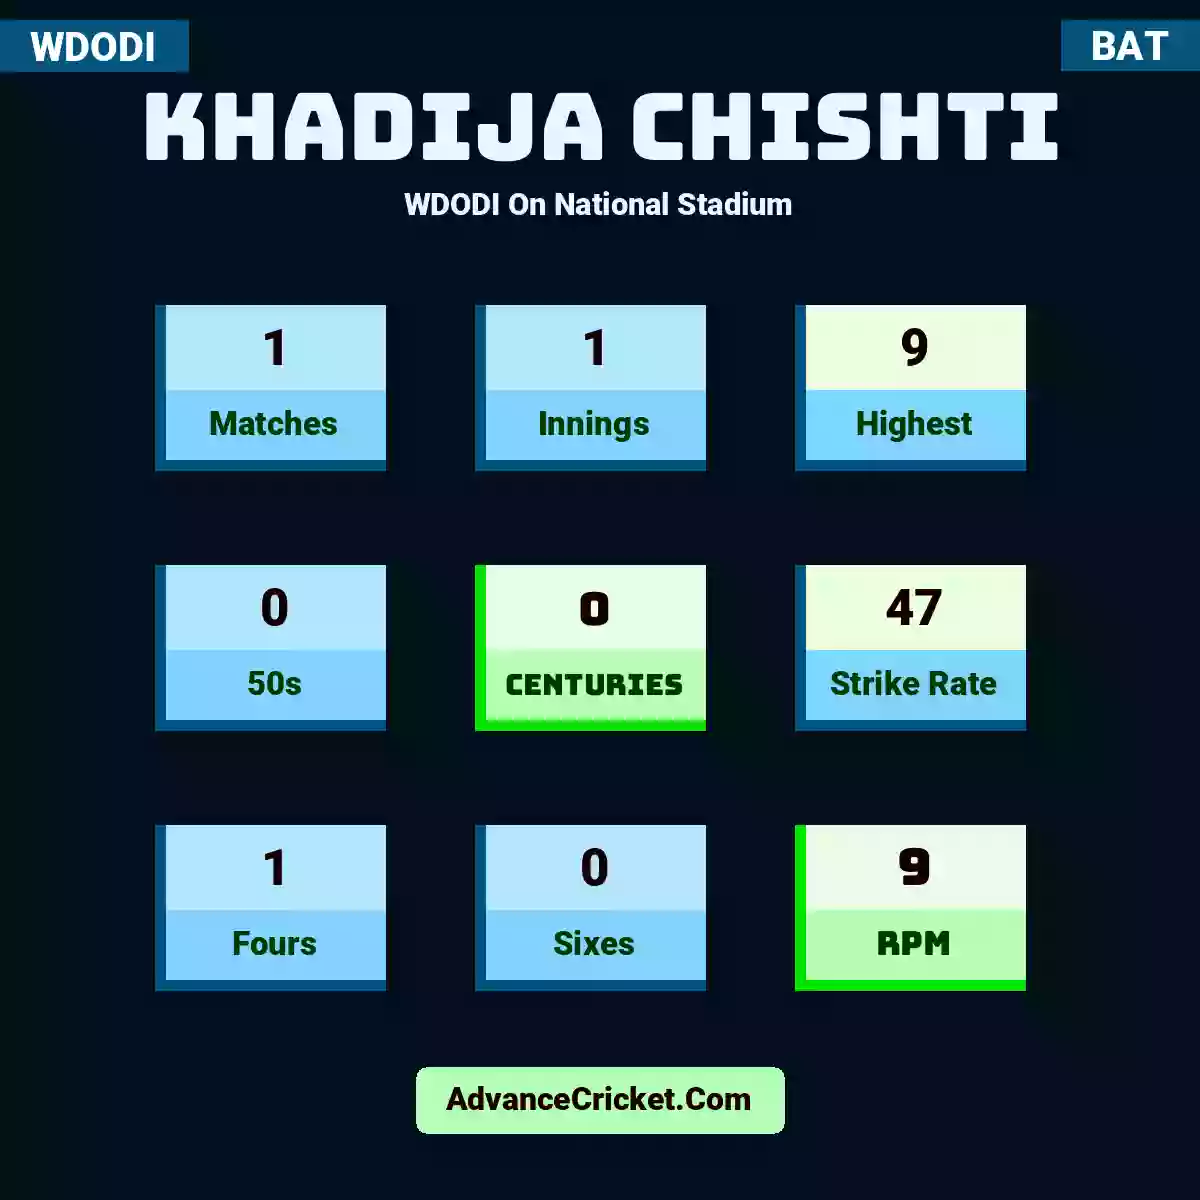 Khadija Chishti WDODI  On National Stadium, Khadija Chishti played 1 matches, scored 9 runs as highest, 0 half-centuries, and 0 centuries, with a strike rate of 47. K.Chishti hit 1 fours and 0 sixes, with an RPM of 9.